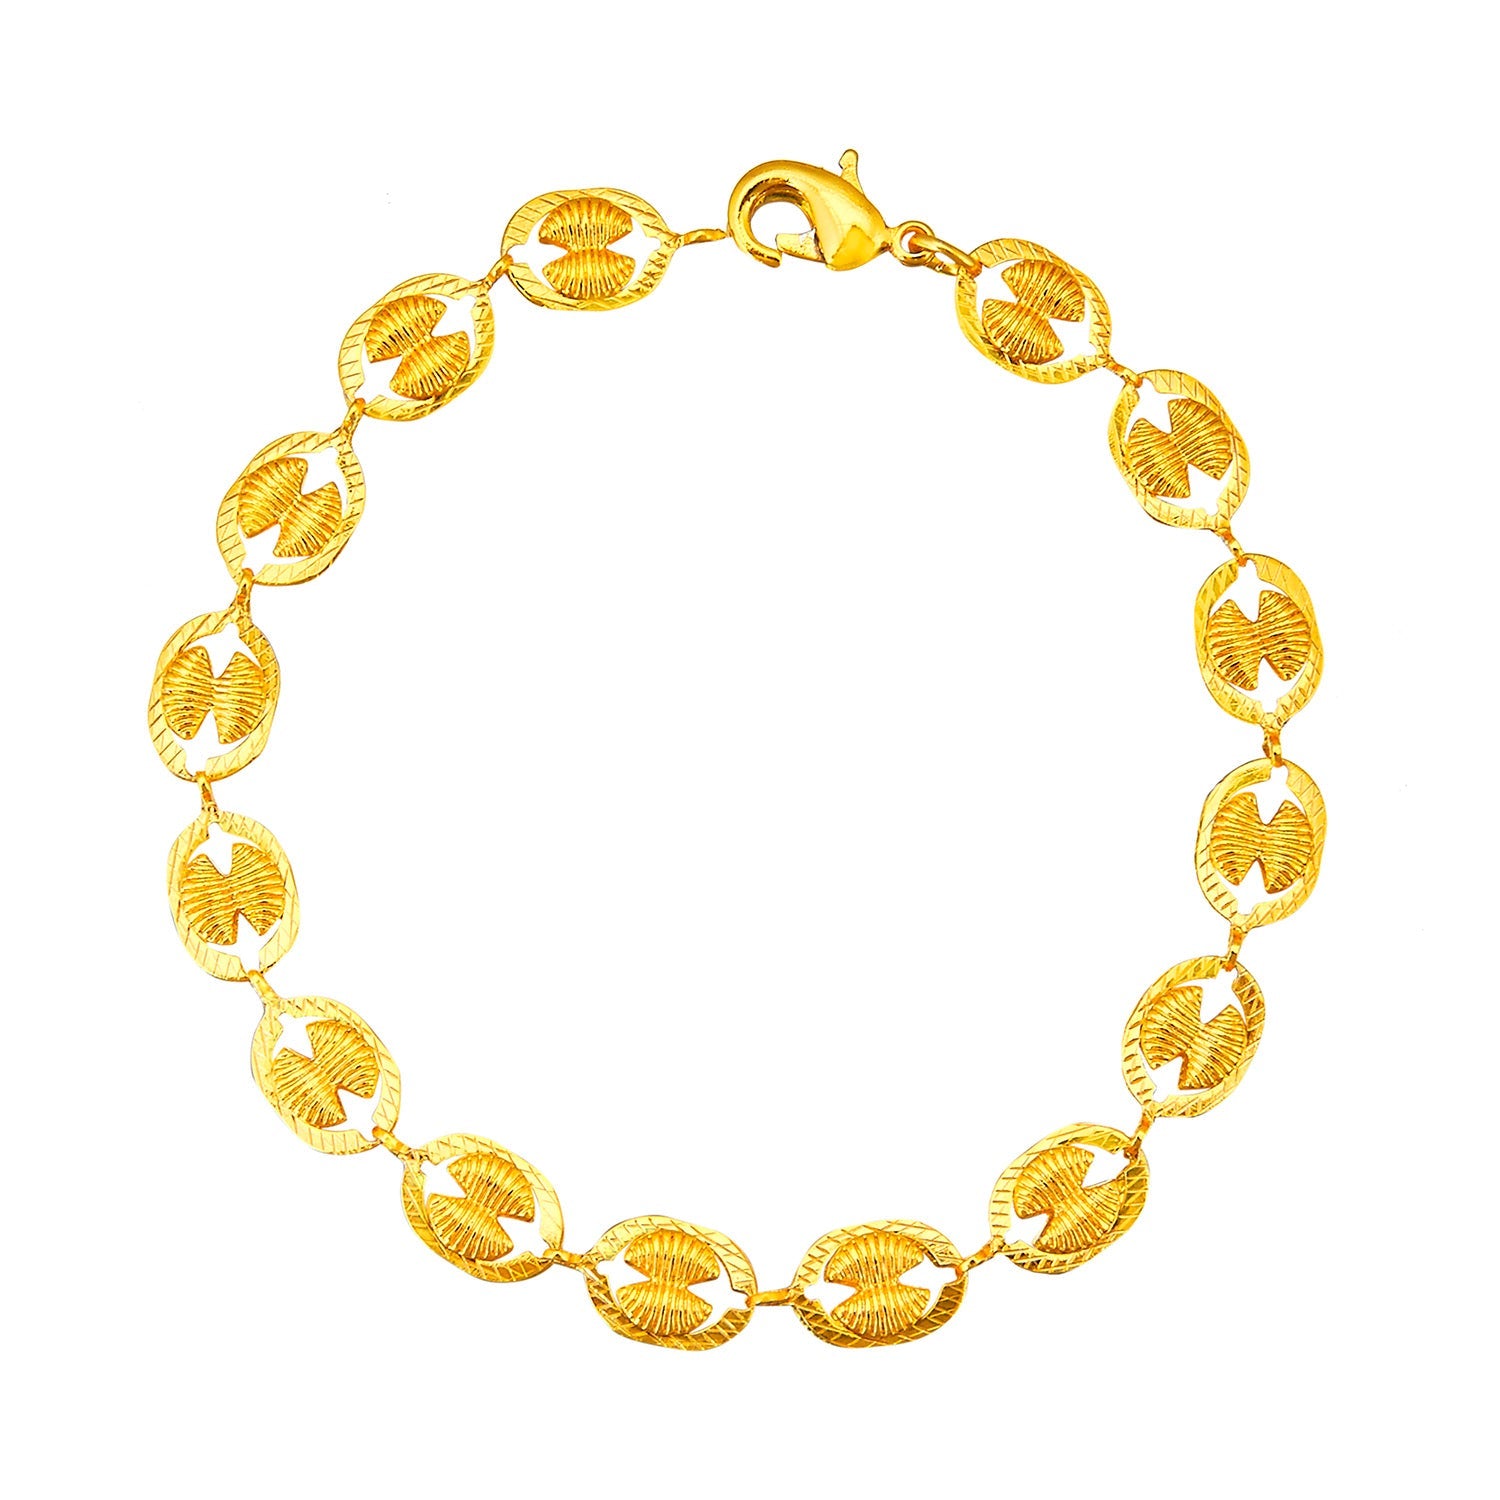 Stylish Gold Bracelet For Women